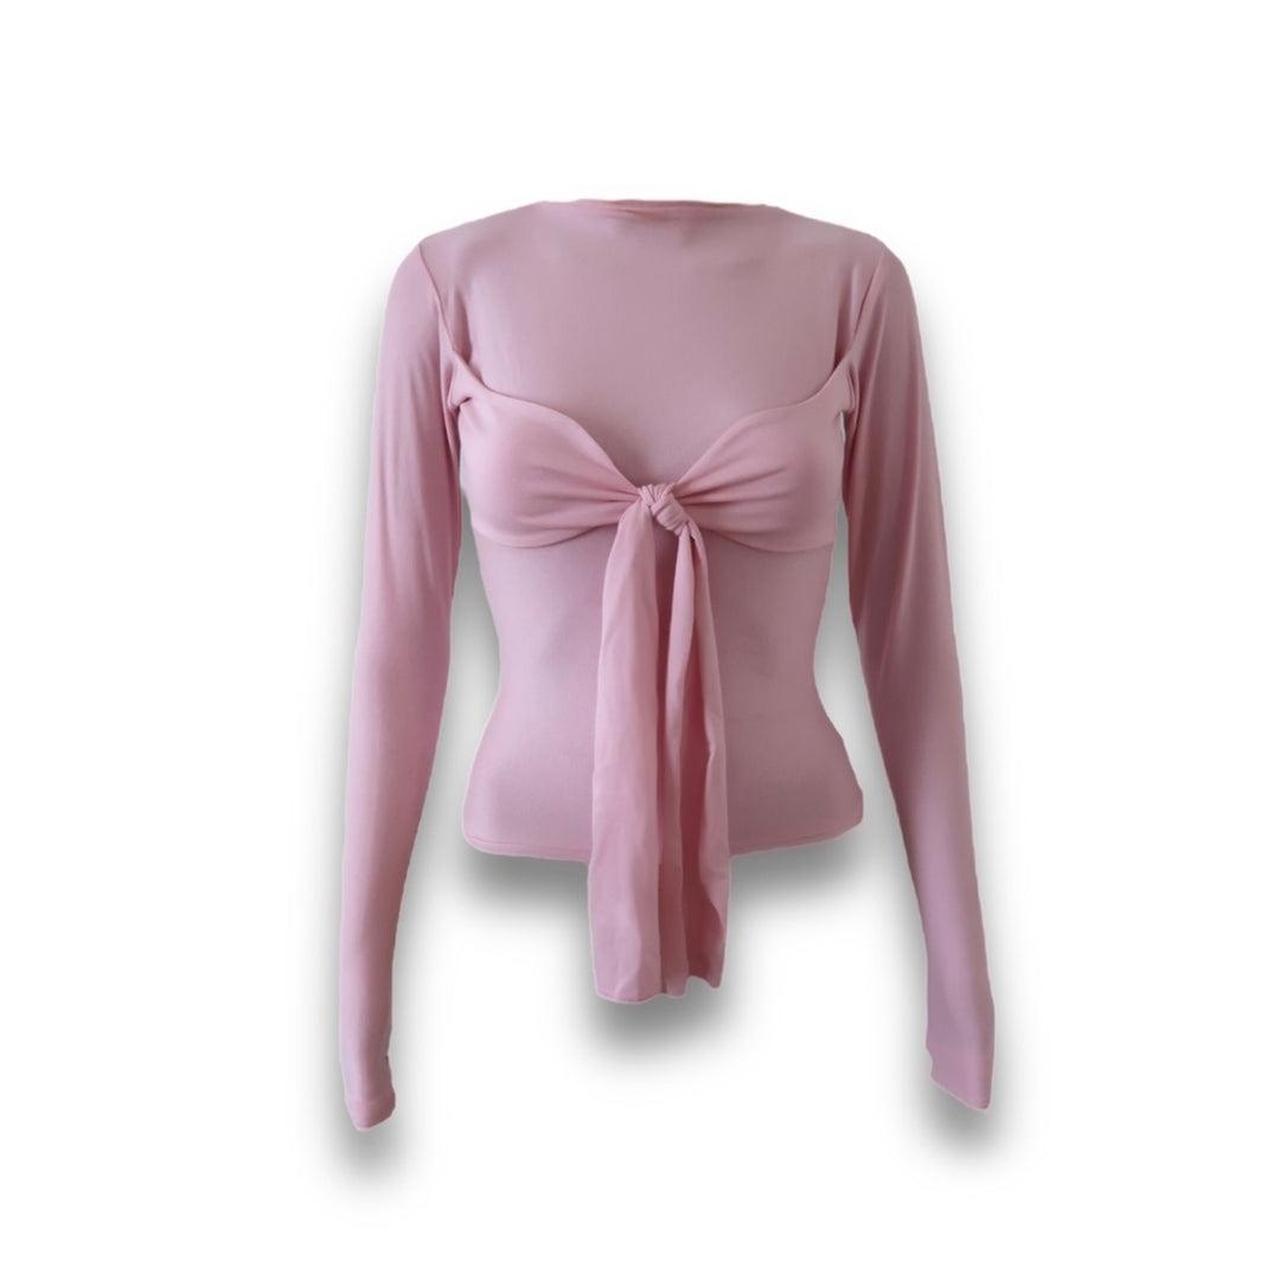 Djerf Avenue Women's Pink Shirt (2)